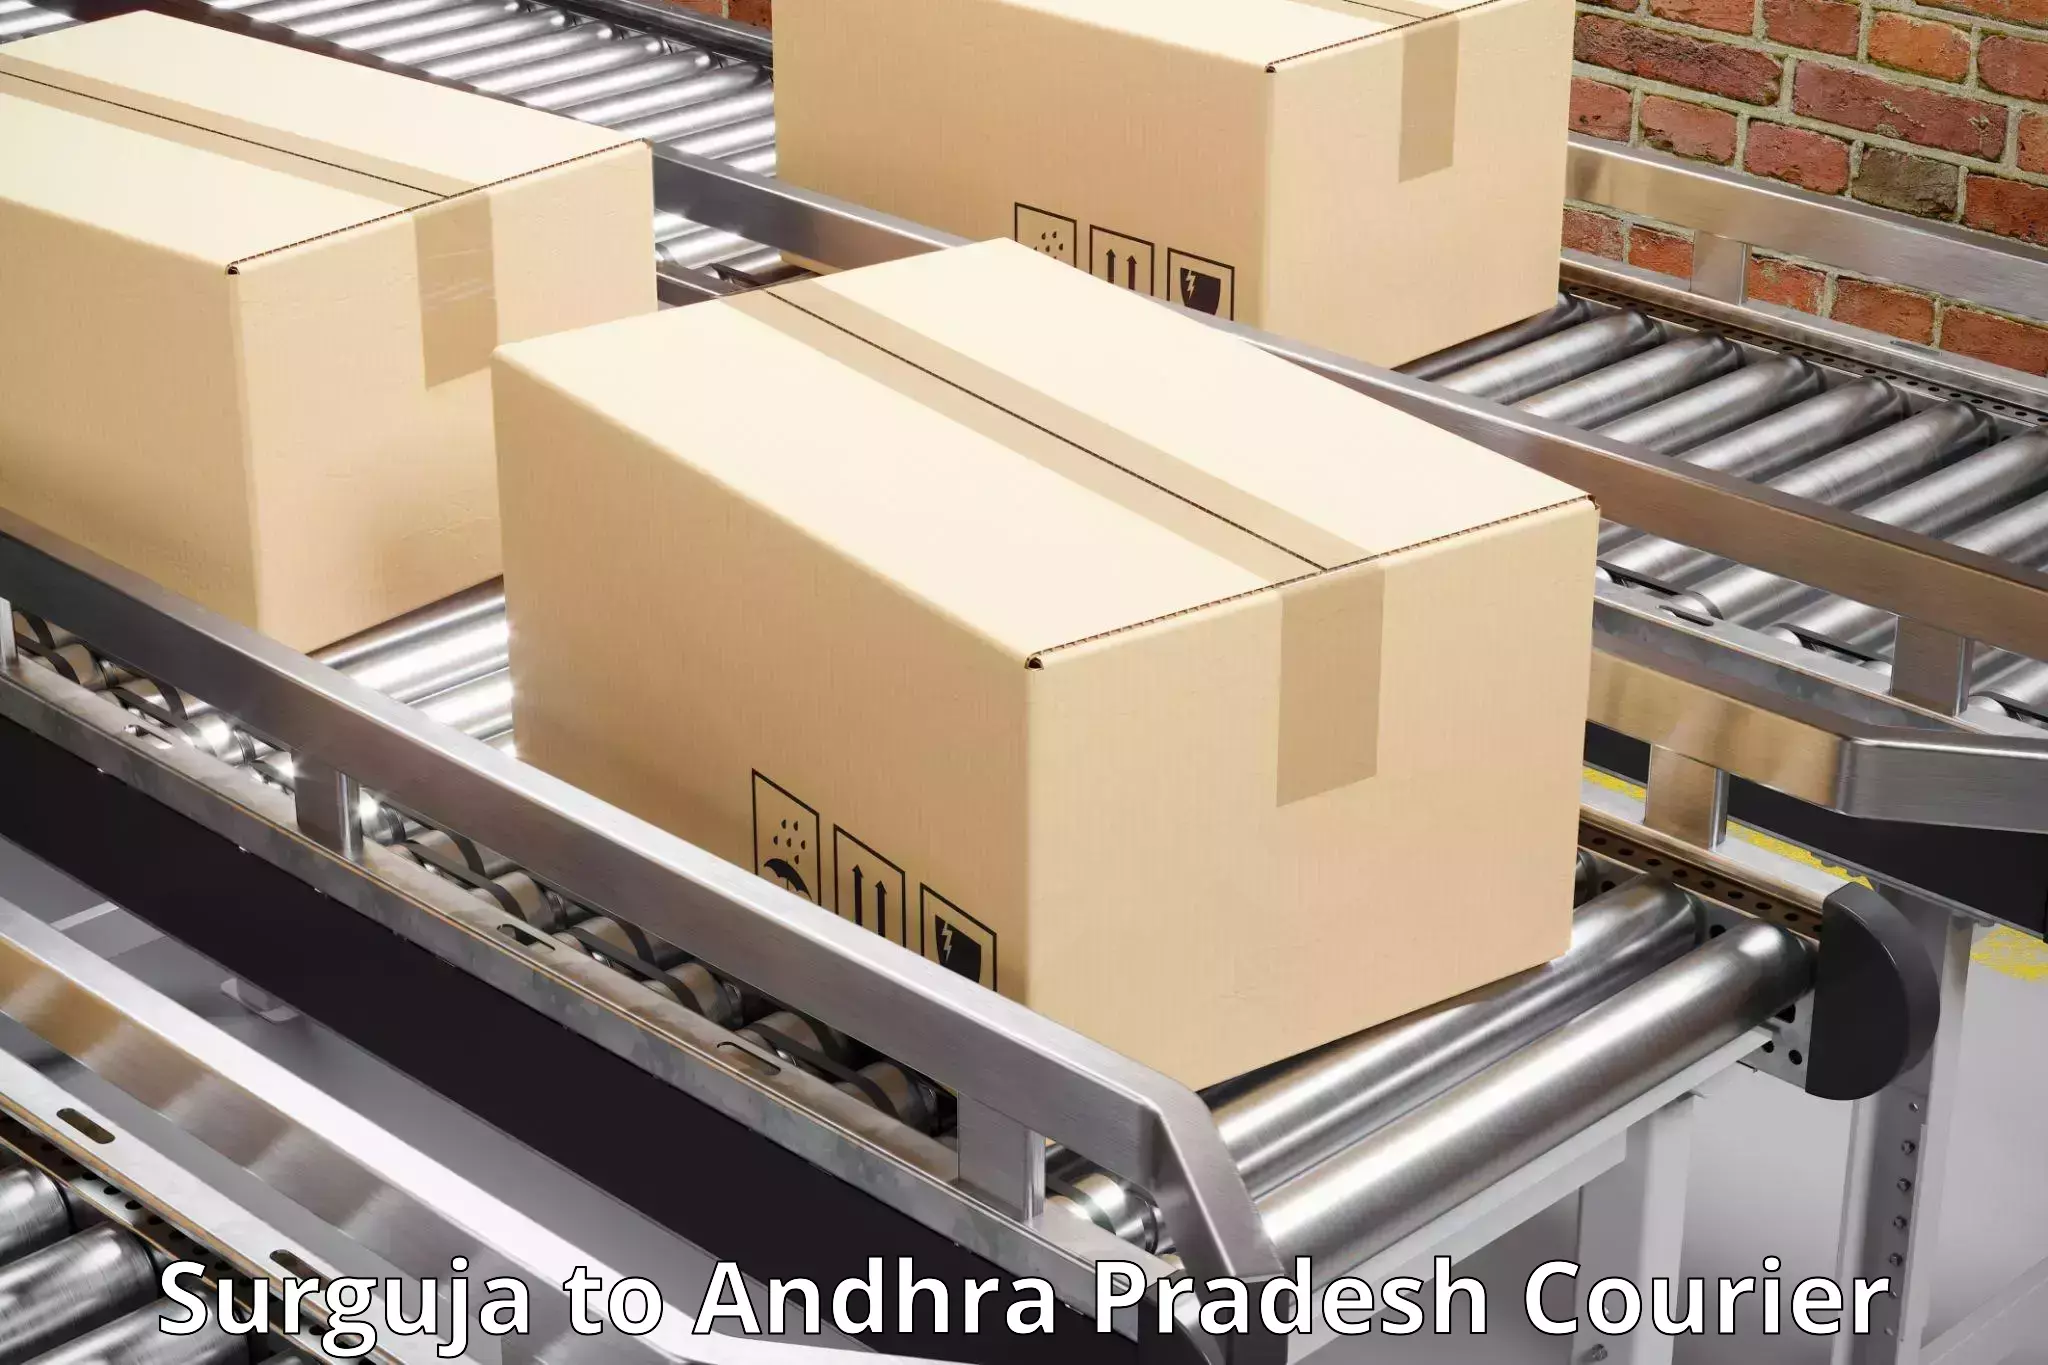 Multi-service courier options Surguja to Kadapa